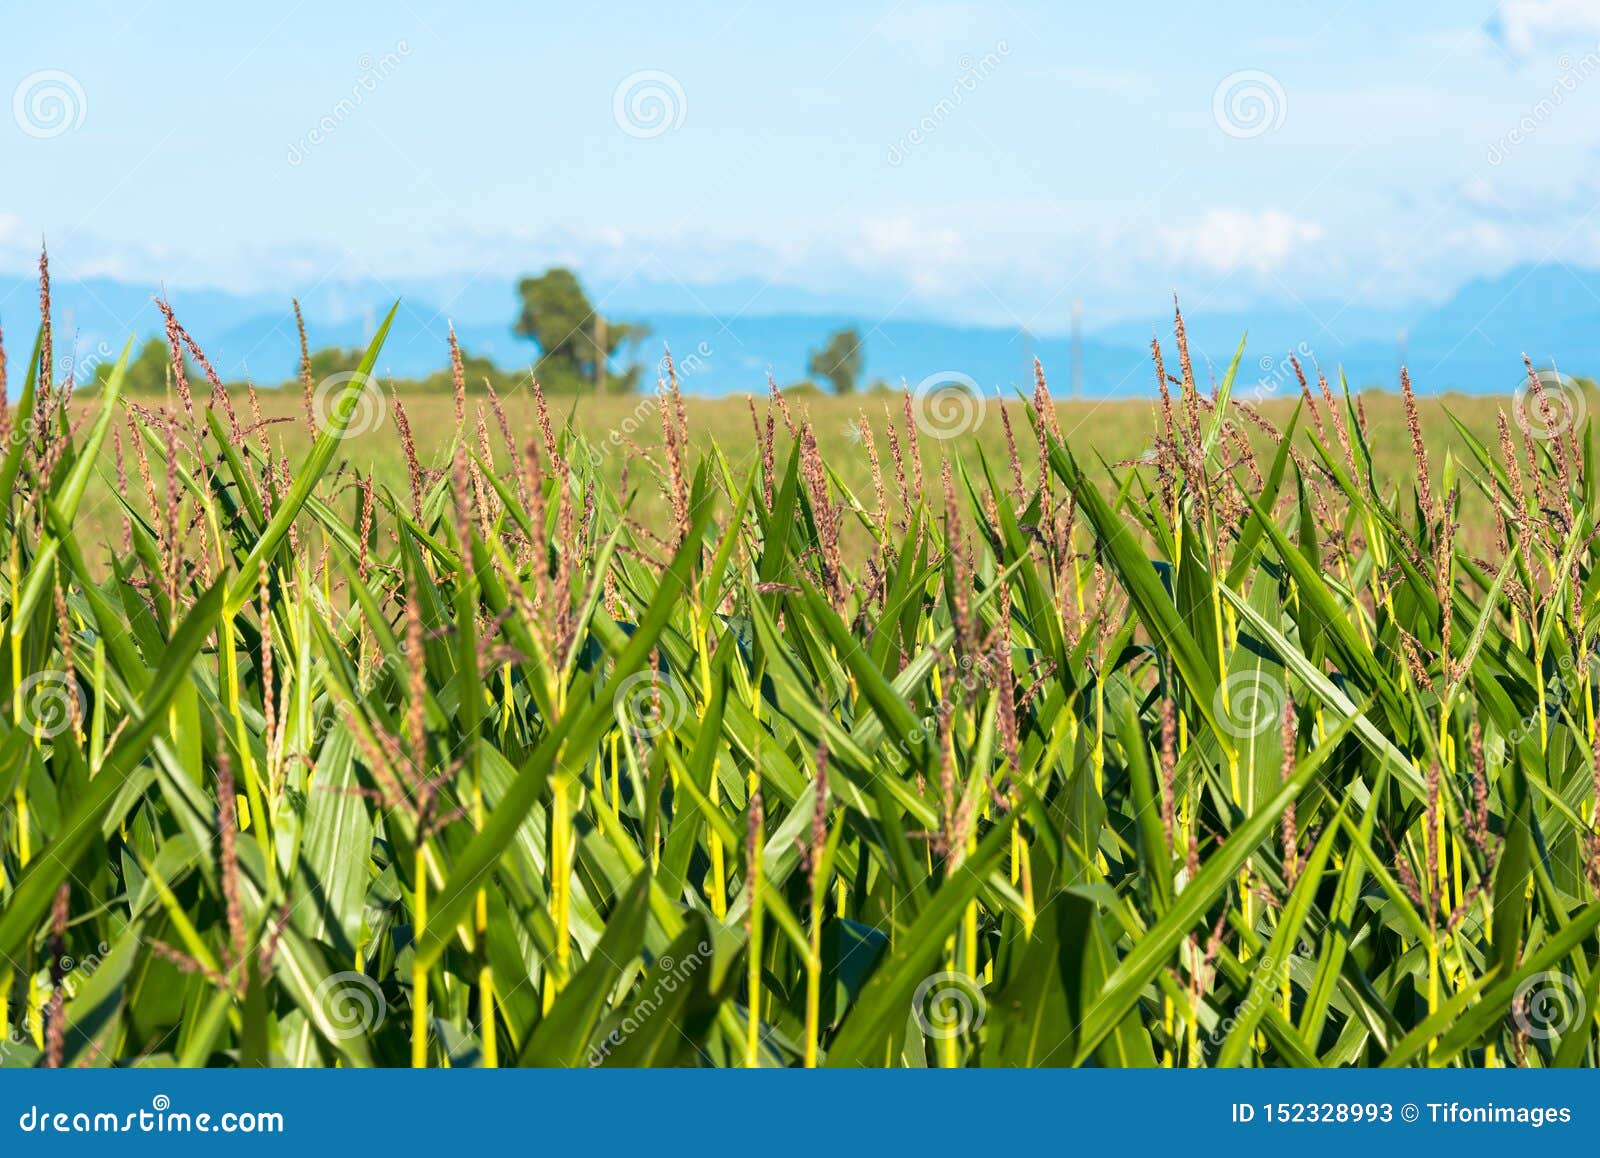 corn crops at the shores of lake llanquihue, chile